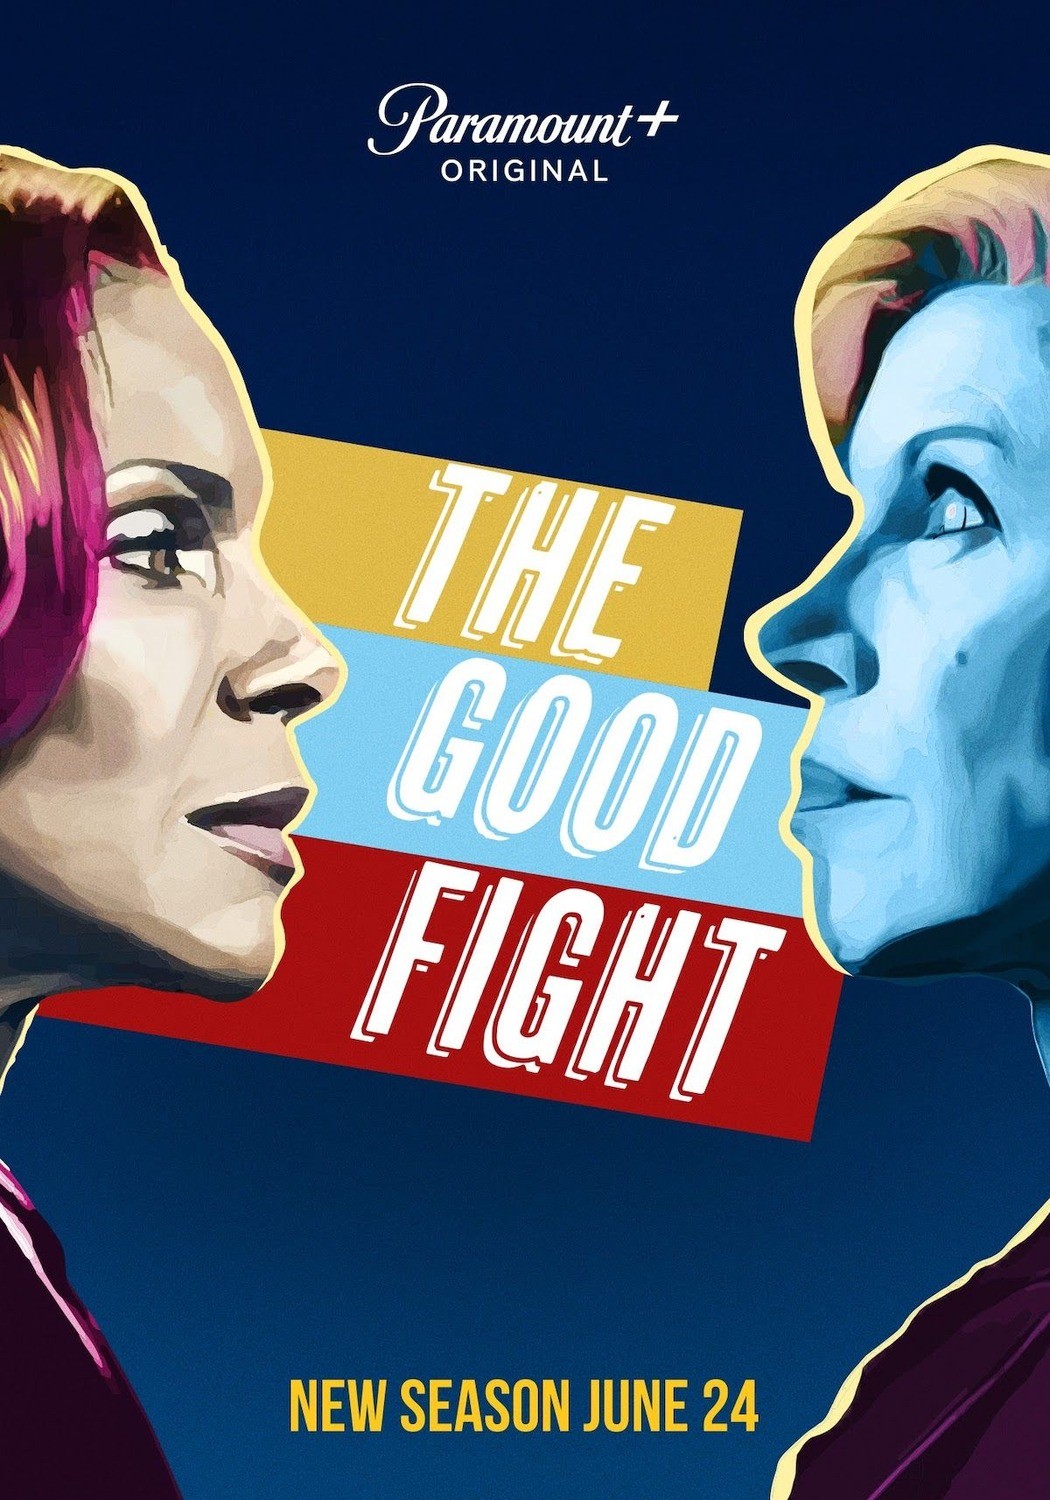 Хорошая борьба / The Good Fight